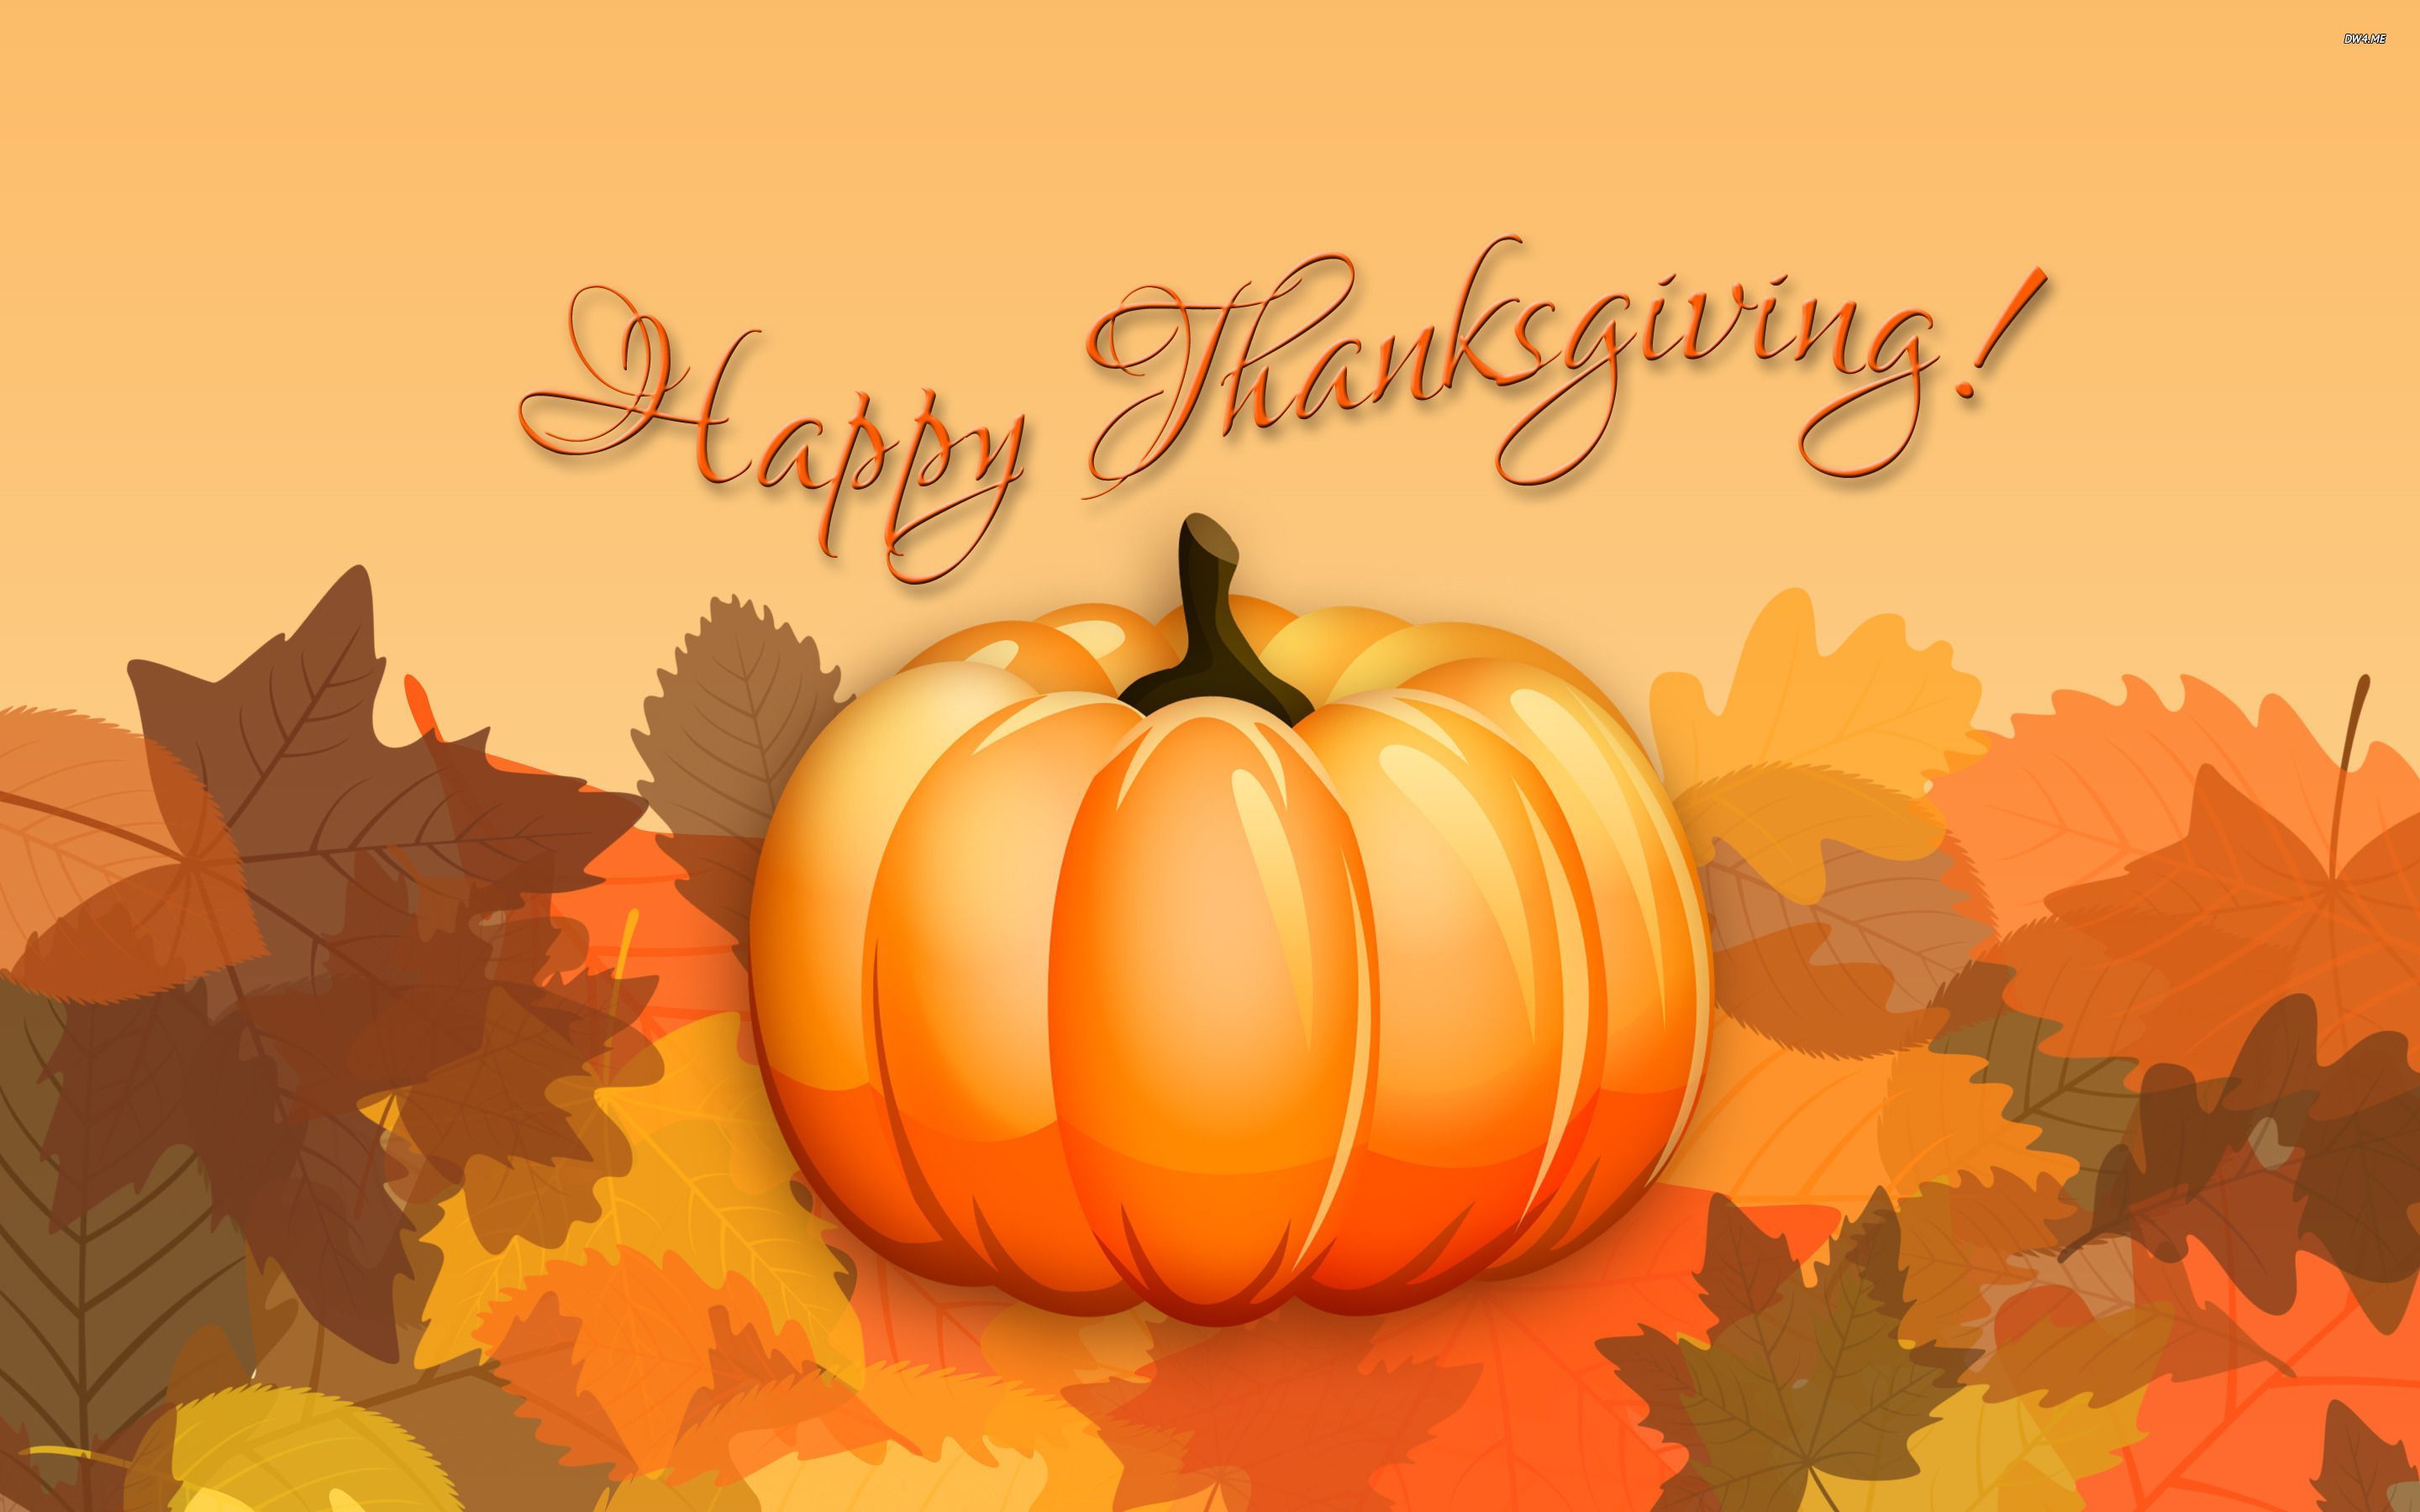 A happy thanksgiving card with an orange pumpkin - Thanksgiving